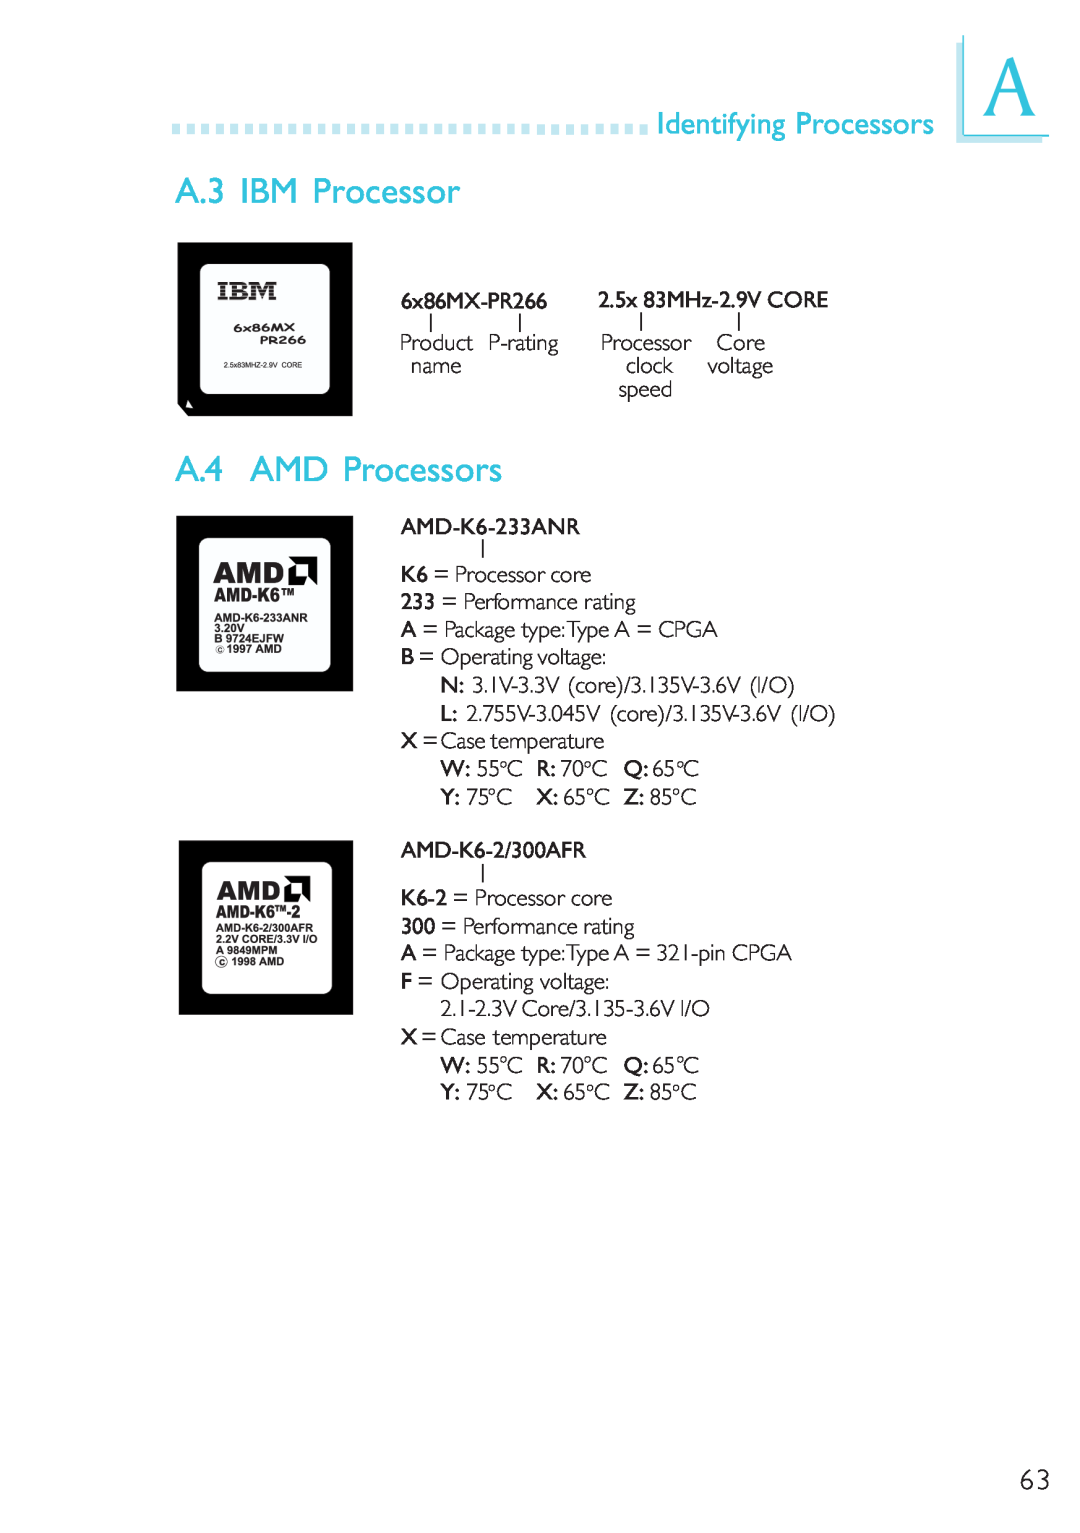 Microsoft G7VP2 manual A.3 IBM Processor, A.4 AMD Processors, Identifying Processors 